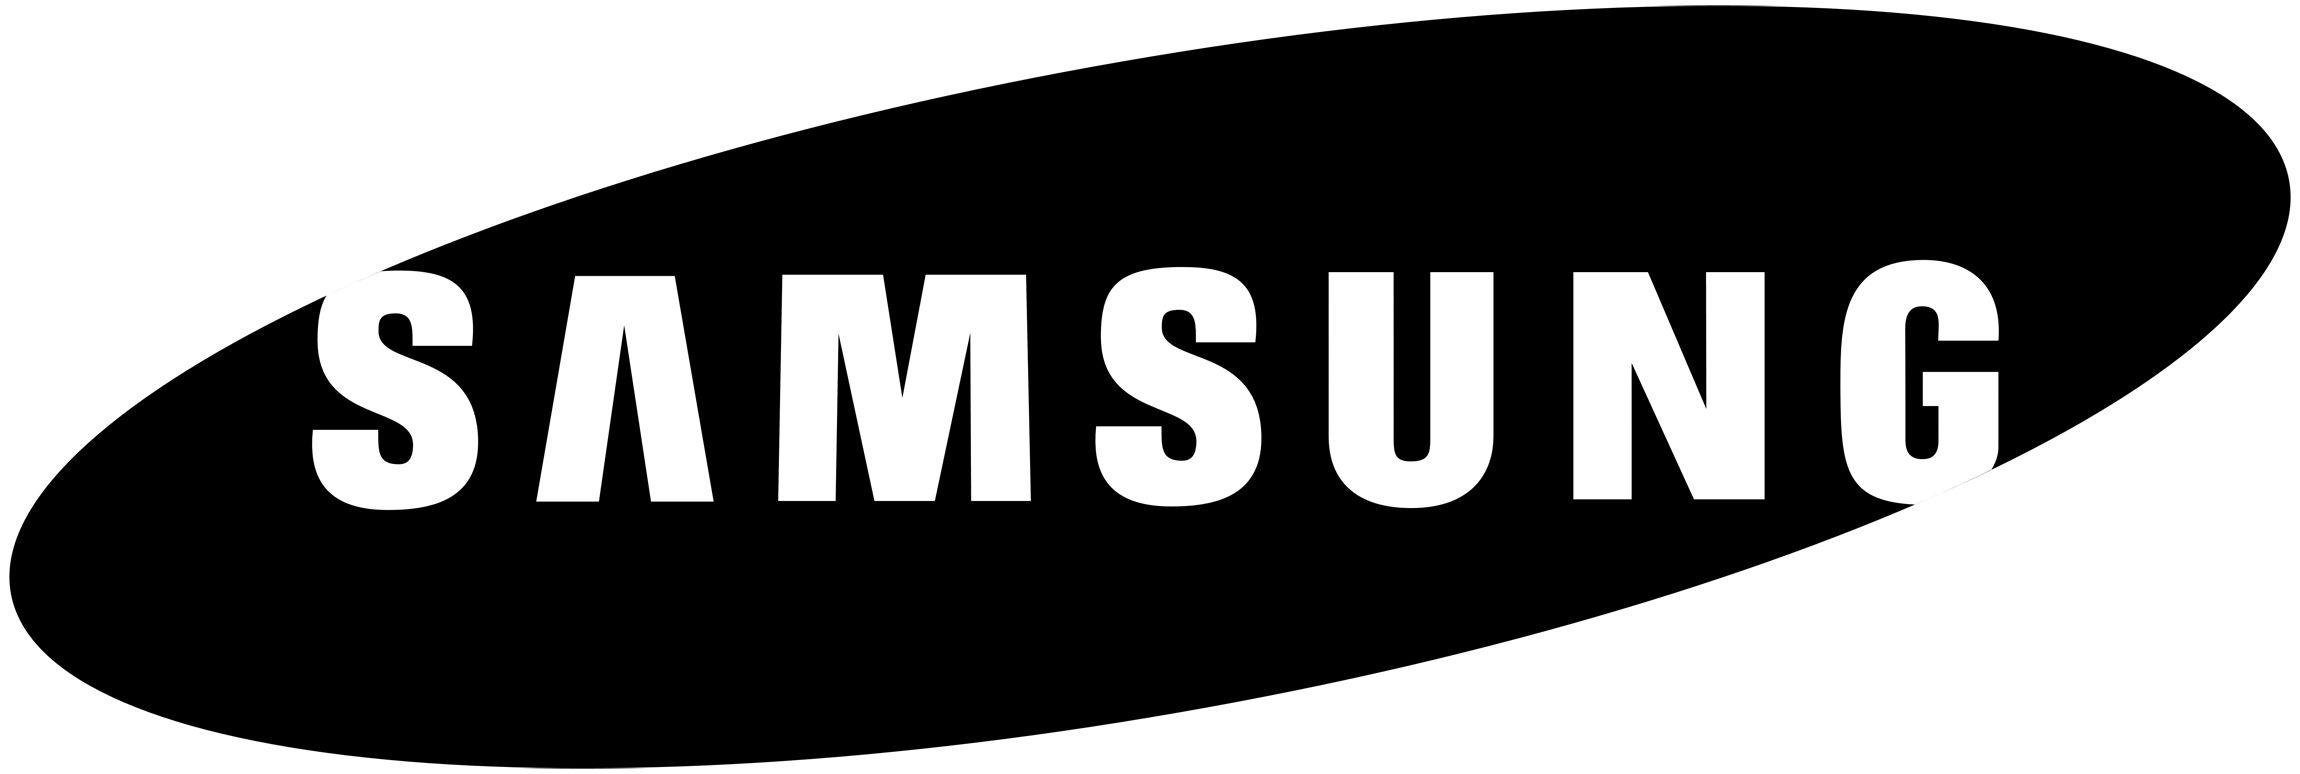 Samsuung Logo - Samsung Logo, Samsung Symbol, Meaning, History and Evolution